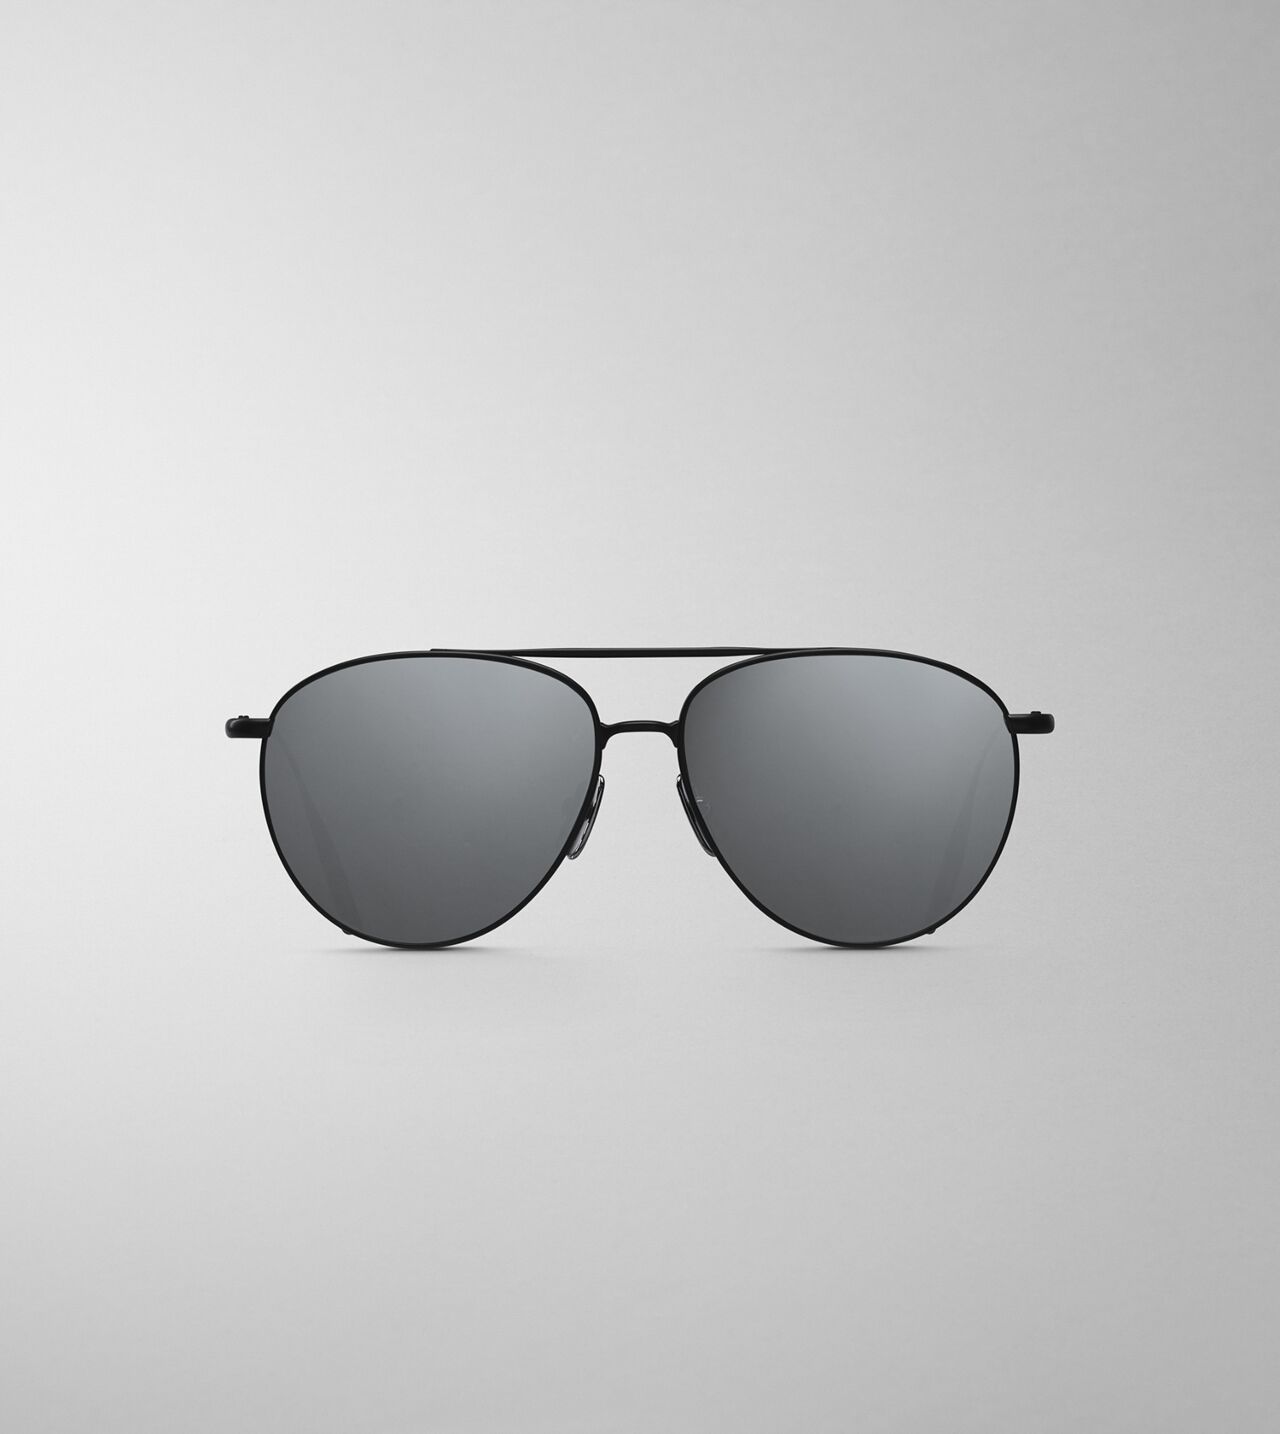 Niiro Sunglasses in Black grey mirror